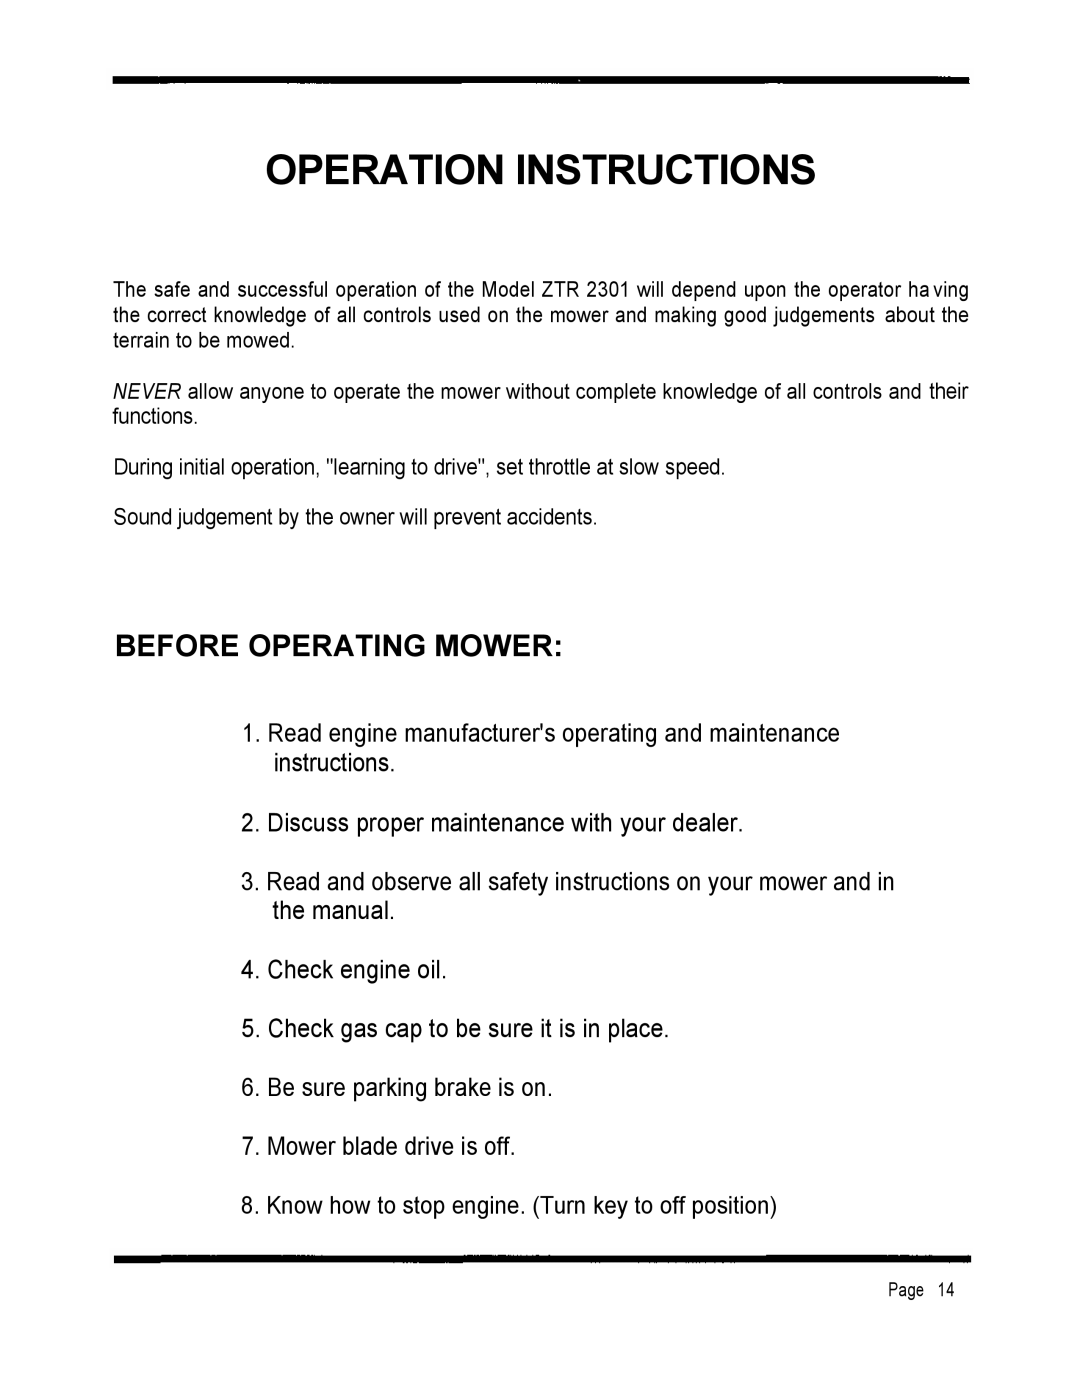 Dixon 2301 manual Operation Instructions, Before Operating Mower 